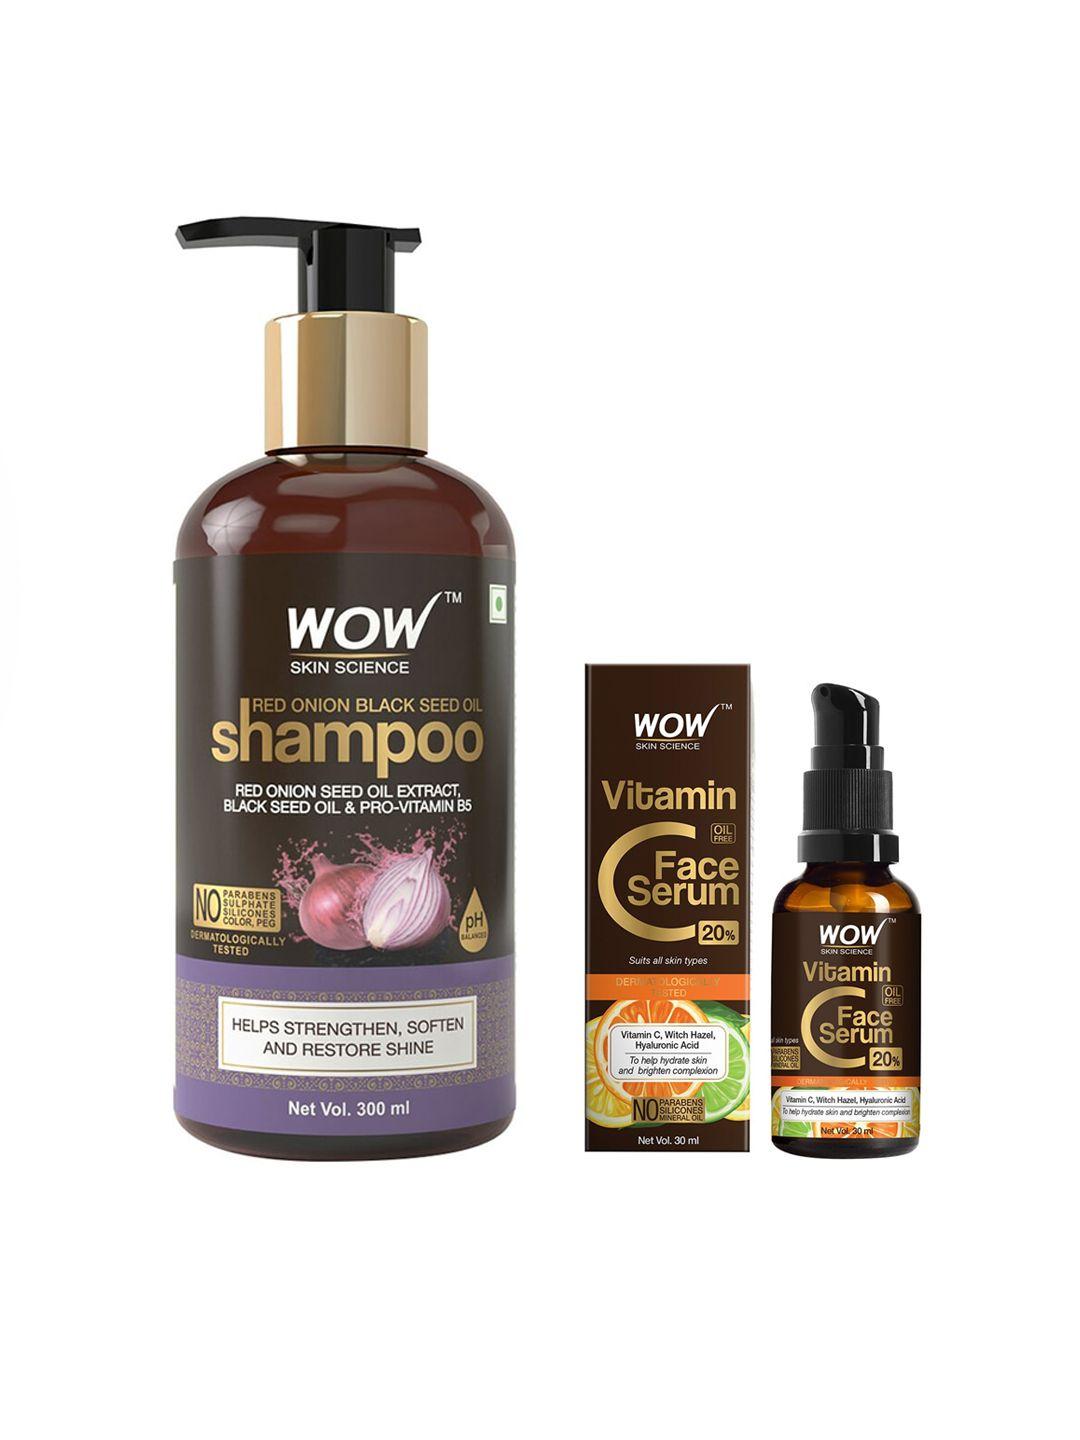 wow skin science unisex set of vitamin c face serum & onion & black seed shampoo -330 ml